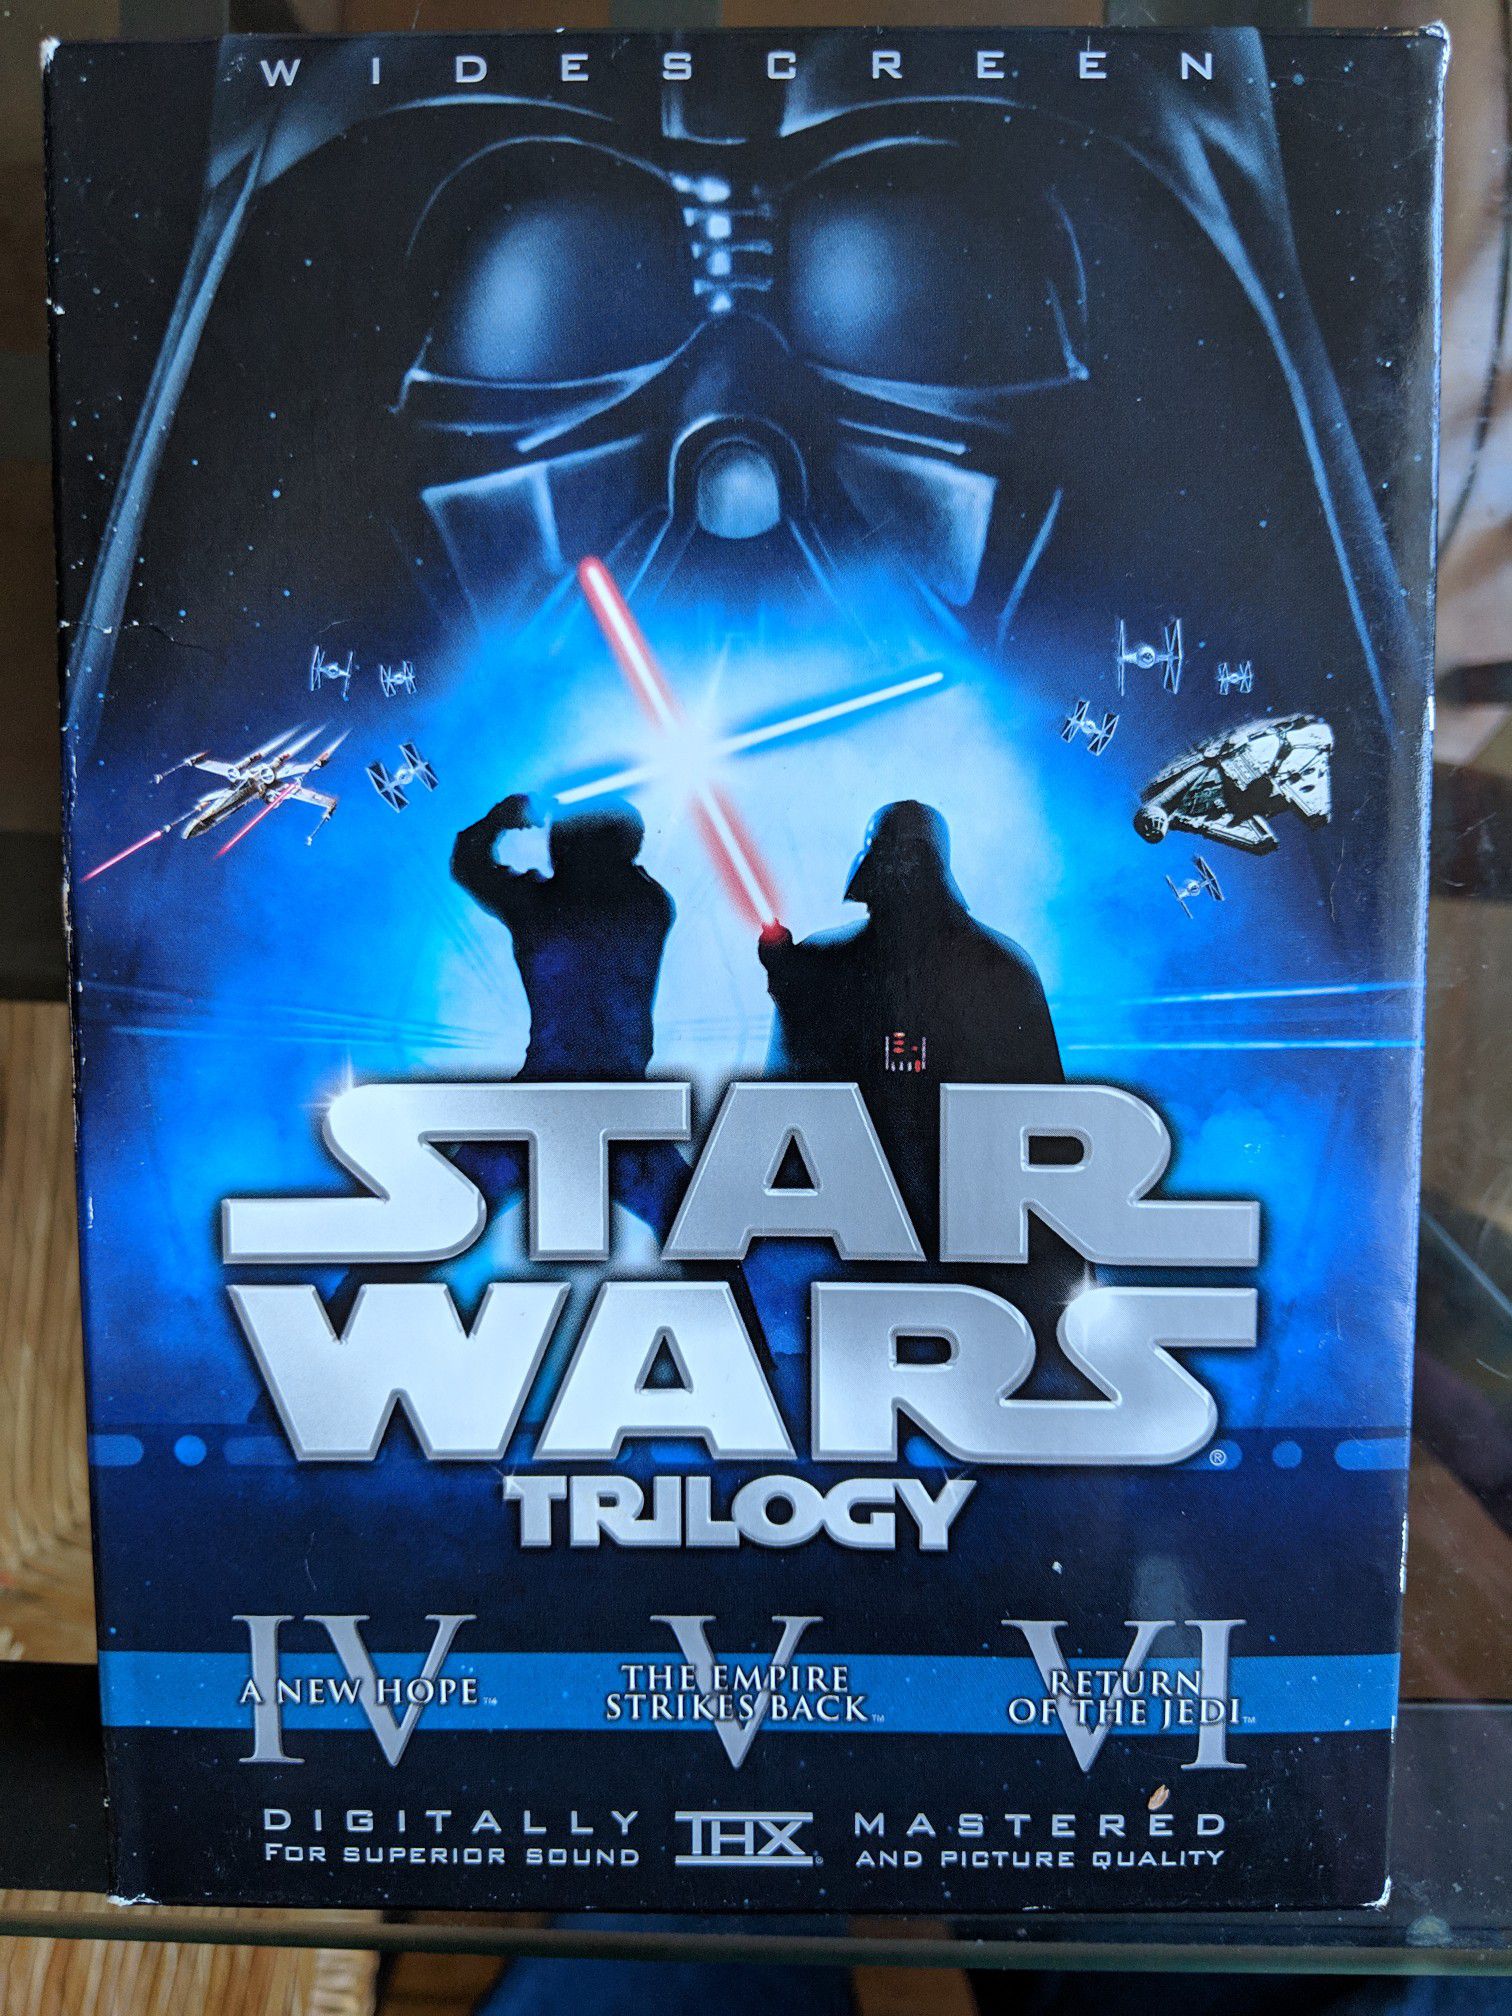 Star Wars Original Trilogy Limited Edition DVD Set with Theatrical Cut Bonus Discs